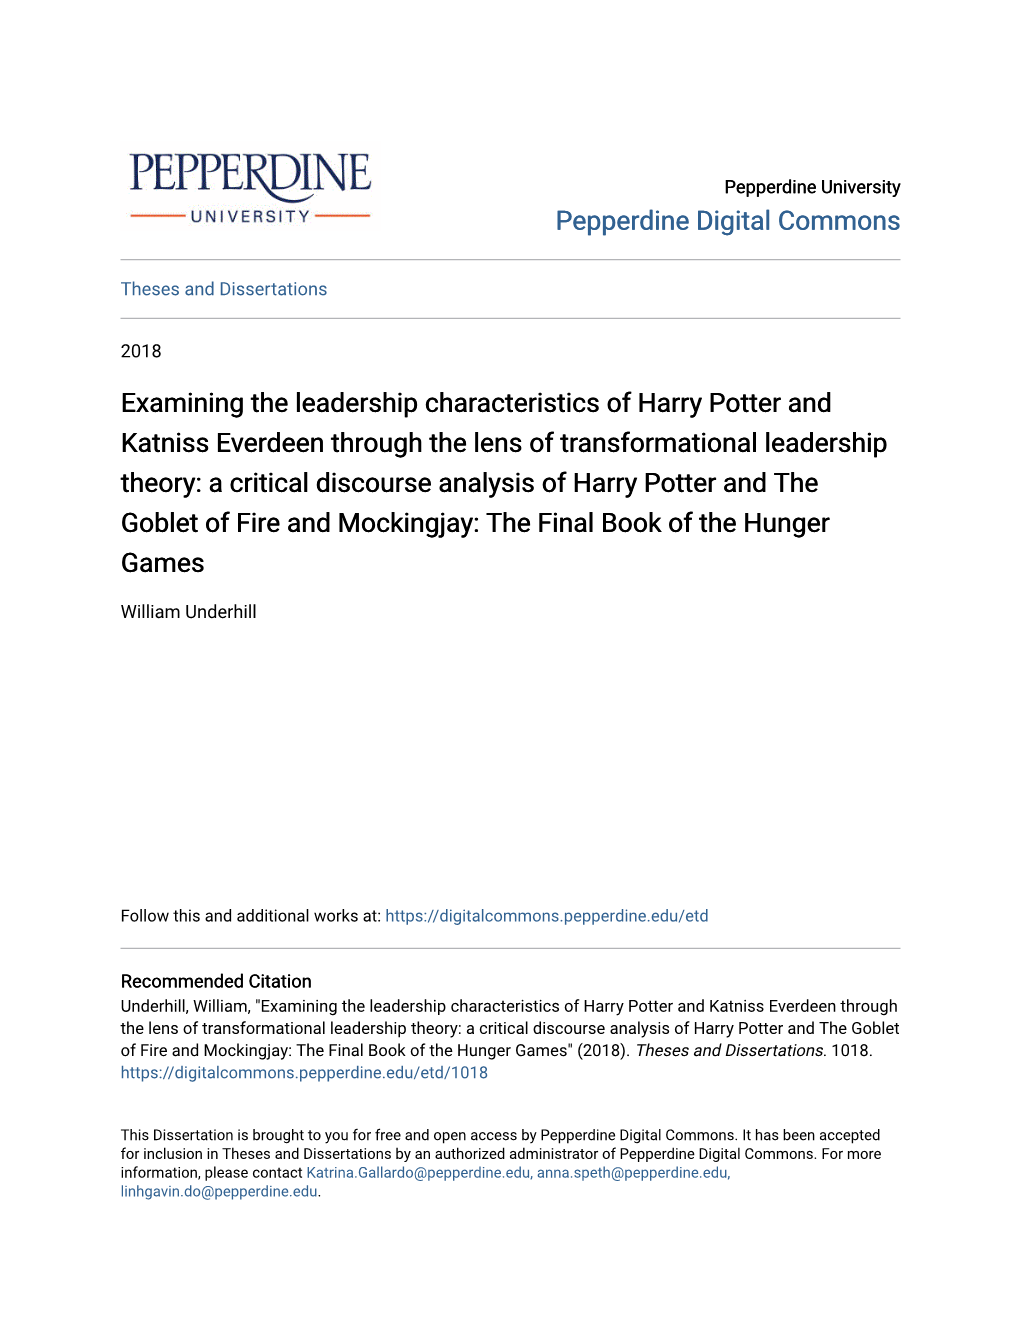 Examining the Leadership Characteristics of Harry Potter And